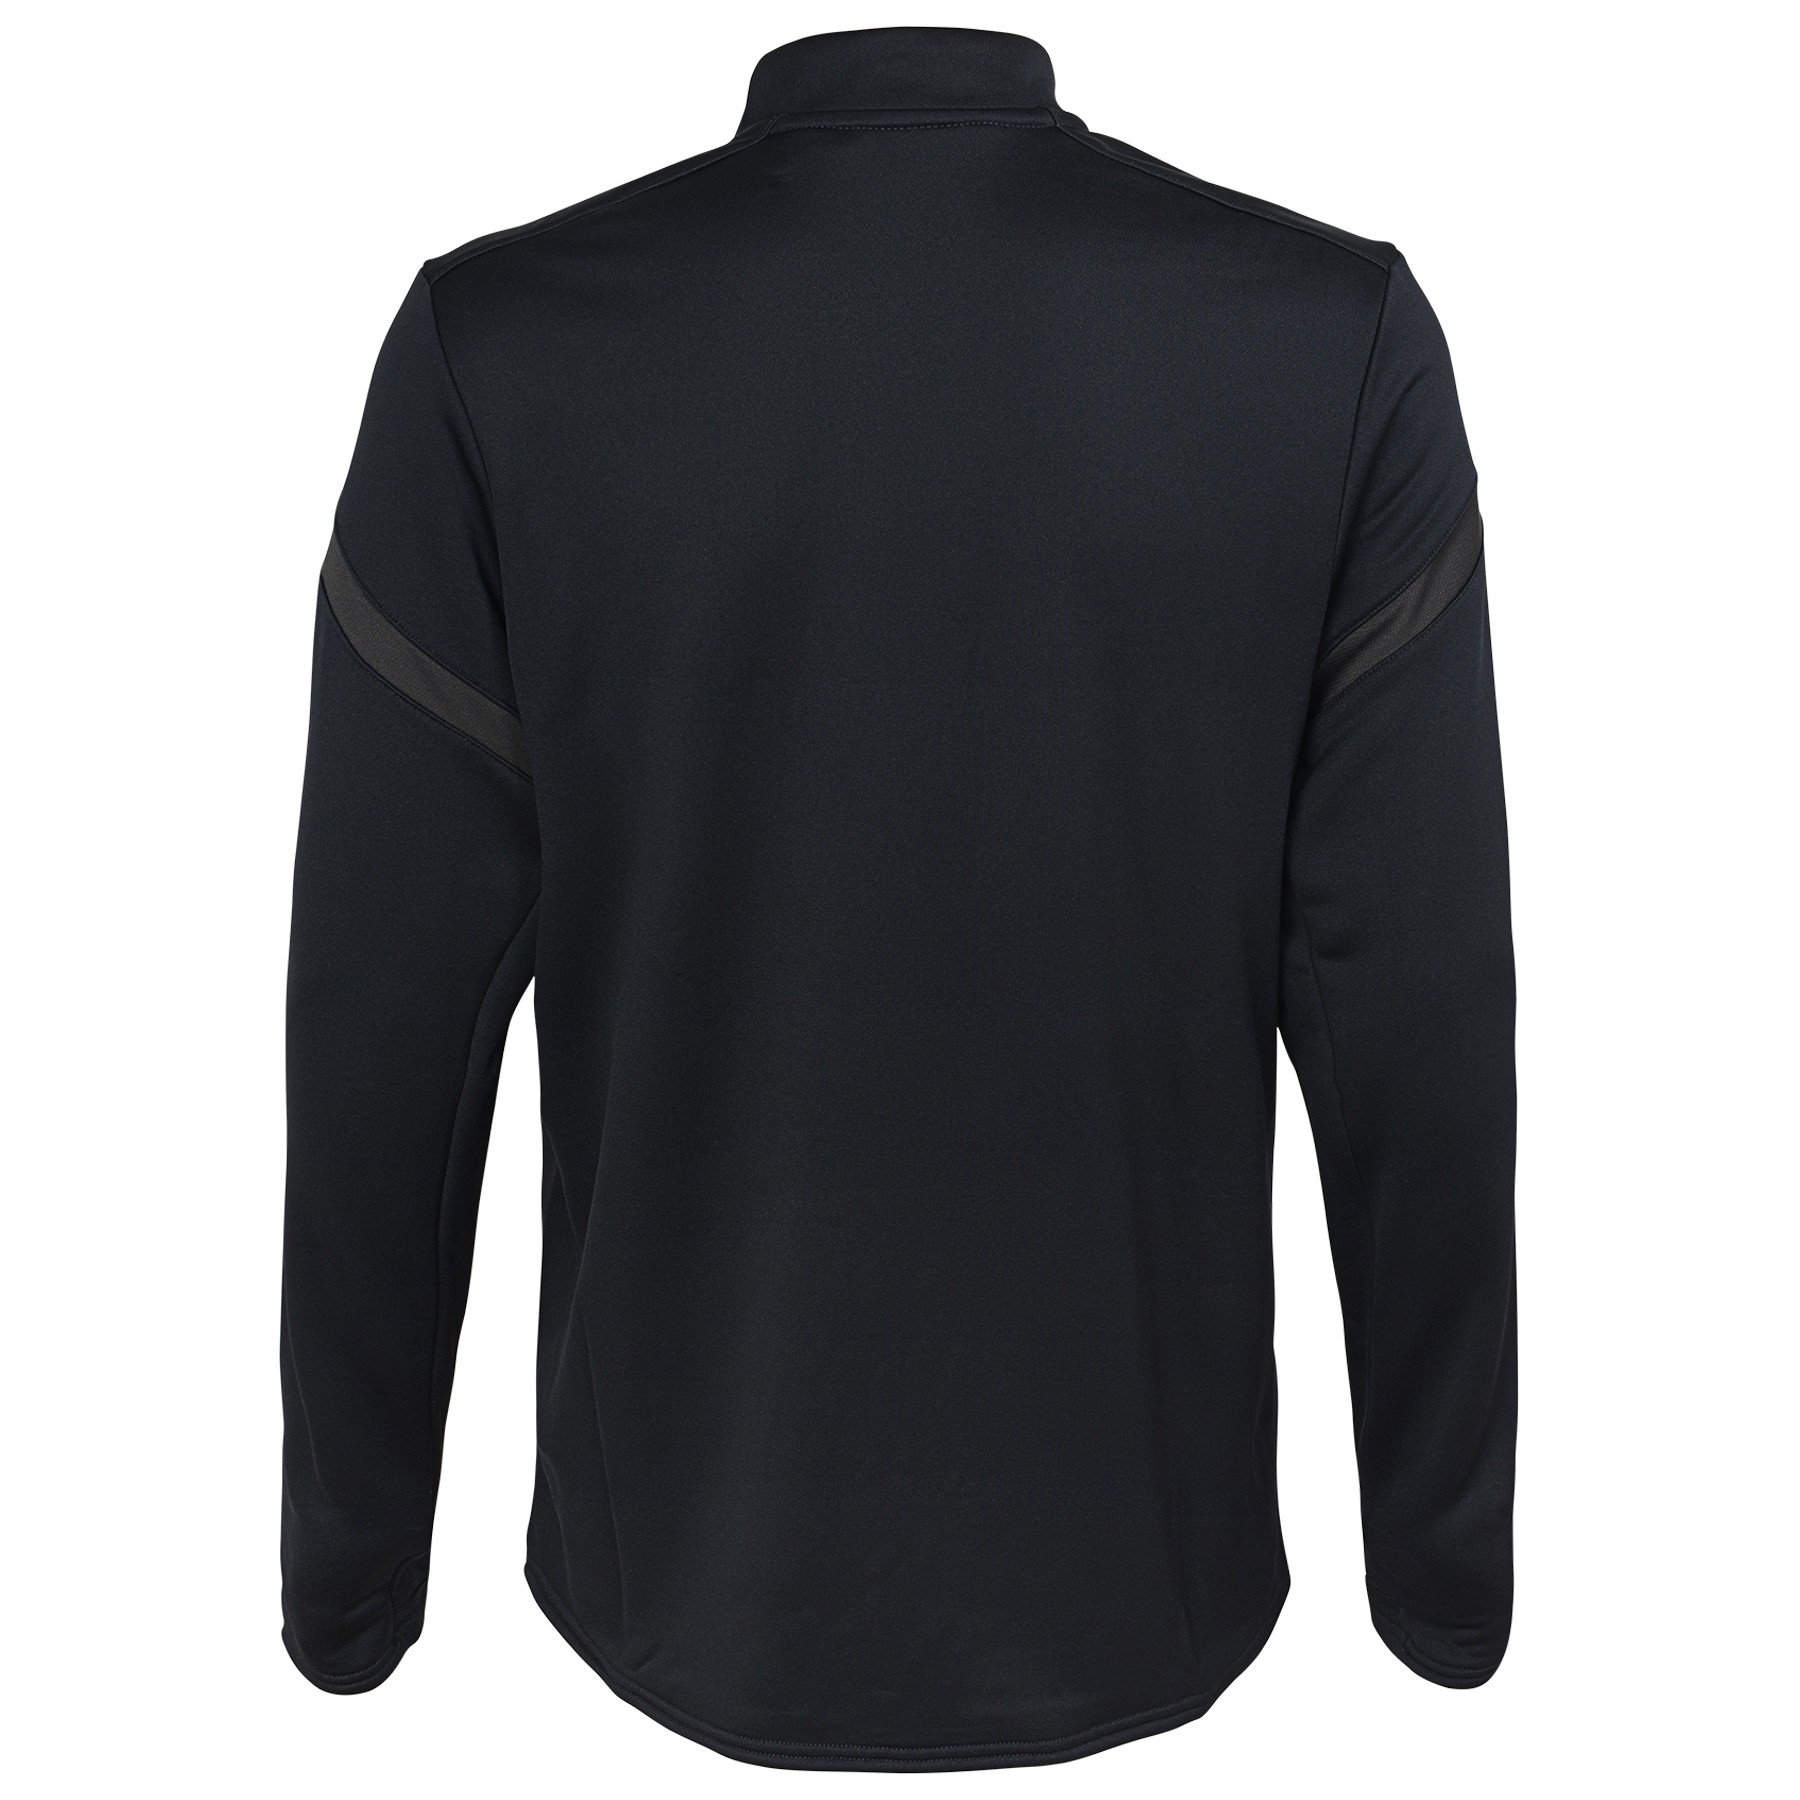 Download Umbro Men's AFC Bournemouth 19/20 Half Zip Soccer Jersey Shirt, Black/Phantom | eBay